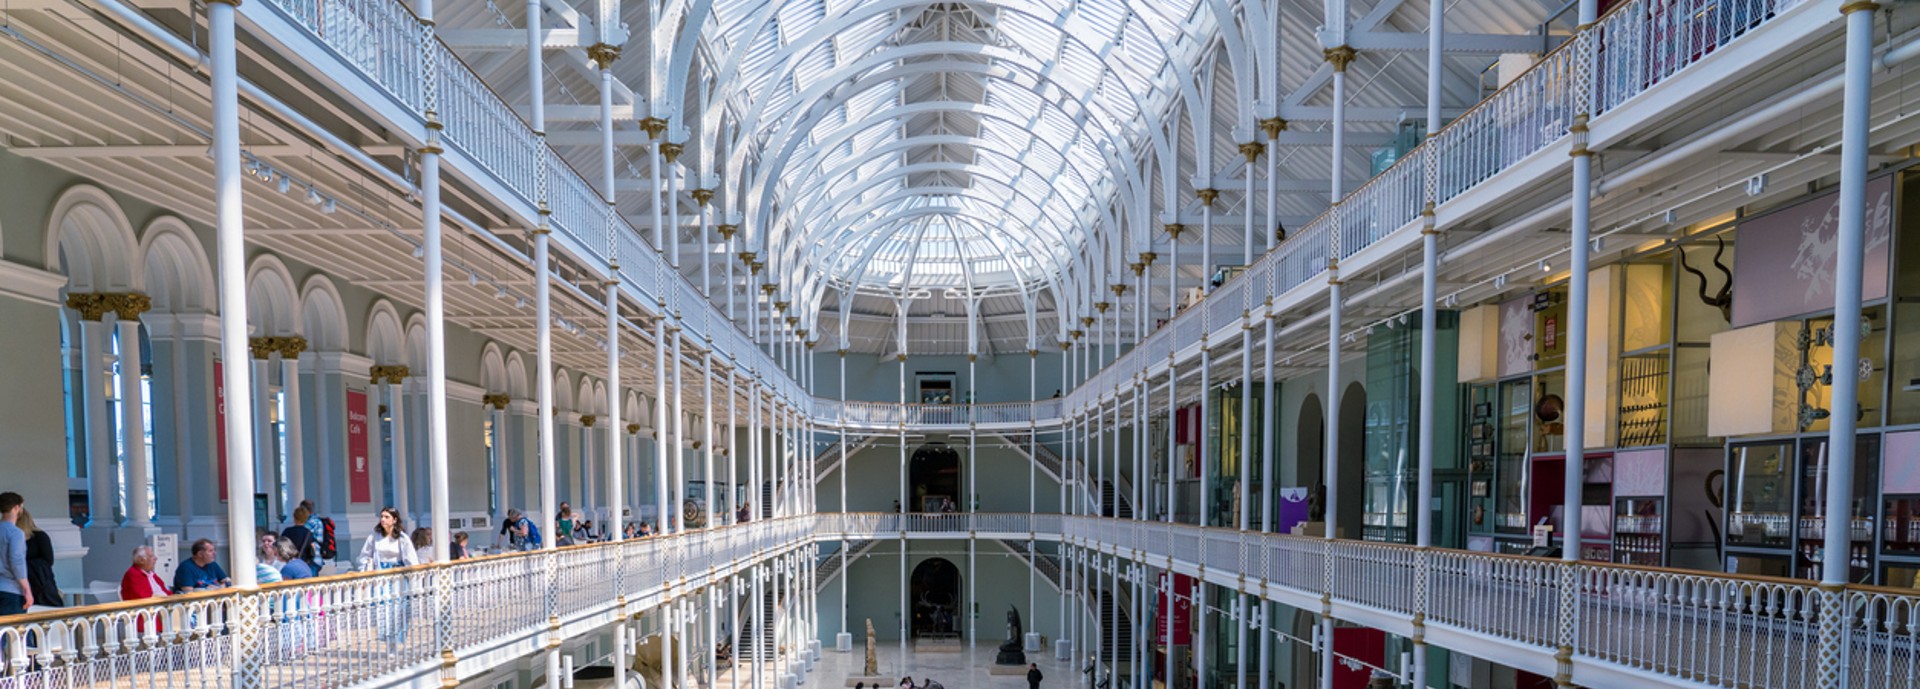 Main Gallery Inside the National Museum of Scotland in Edinburgh